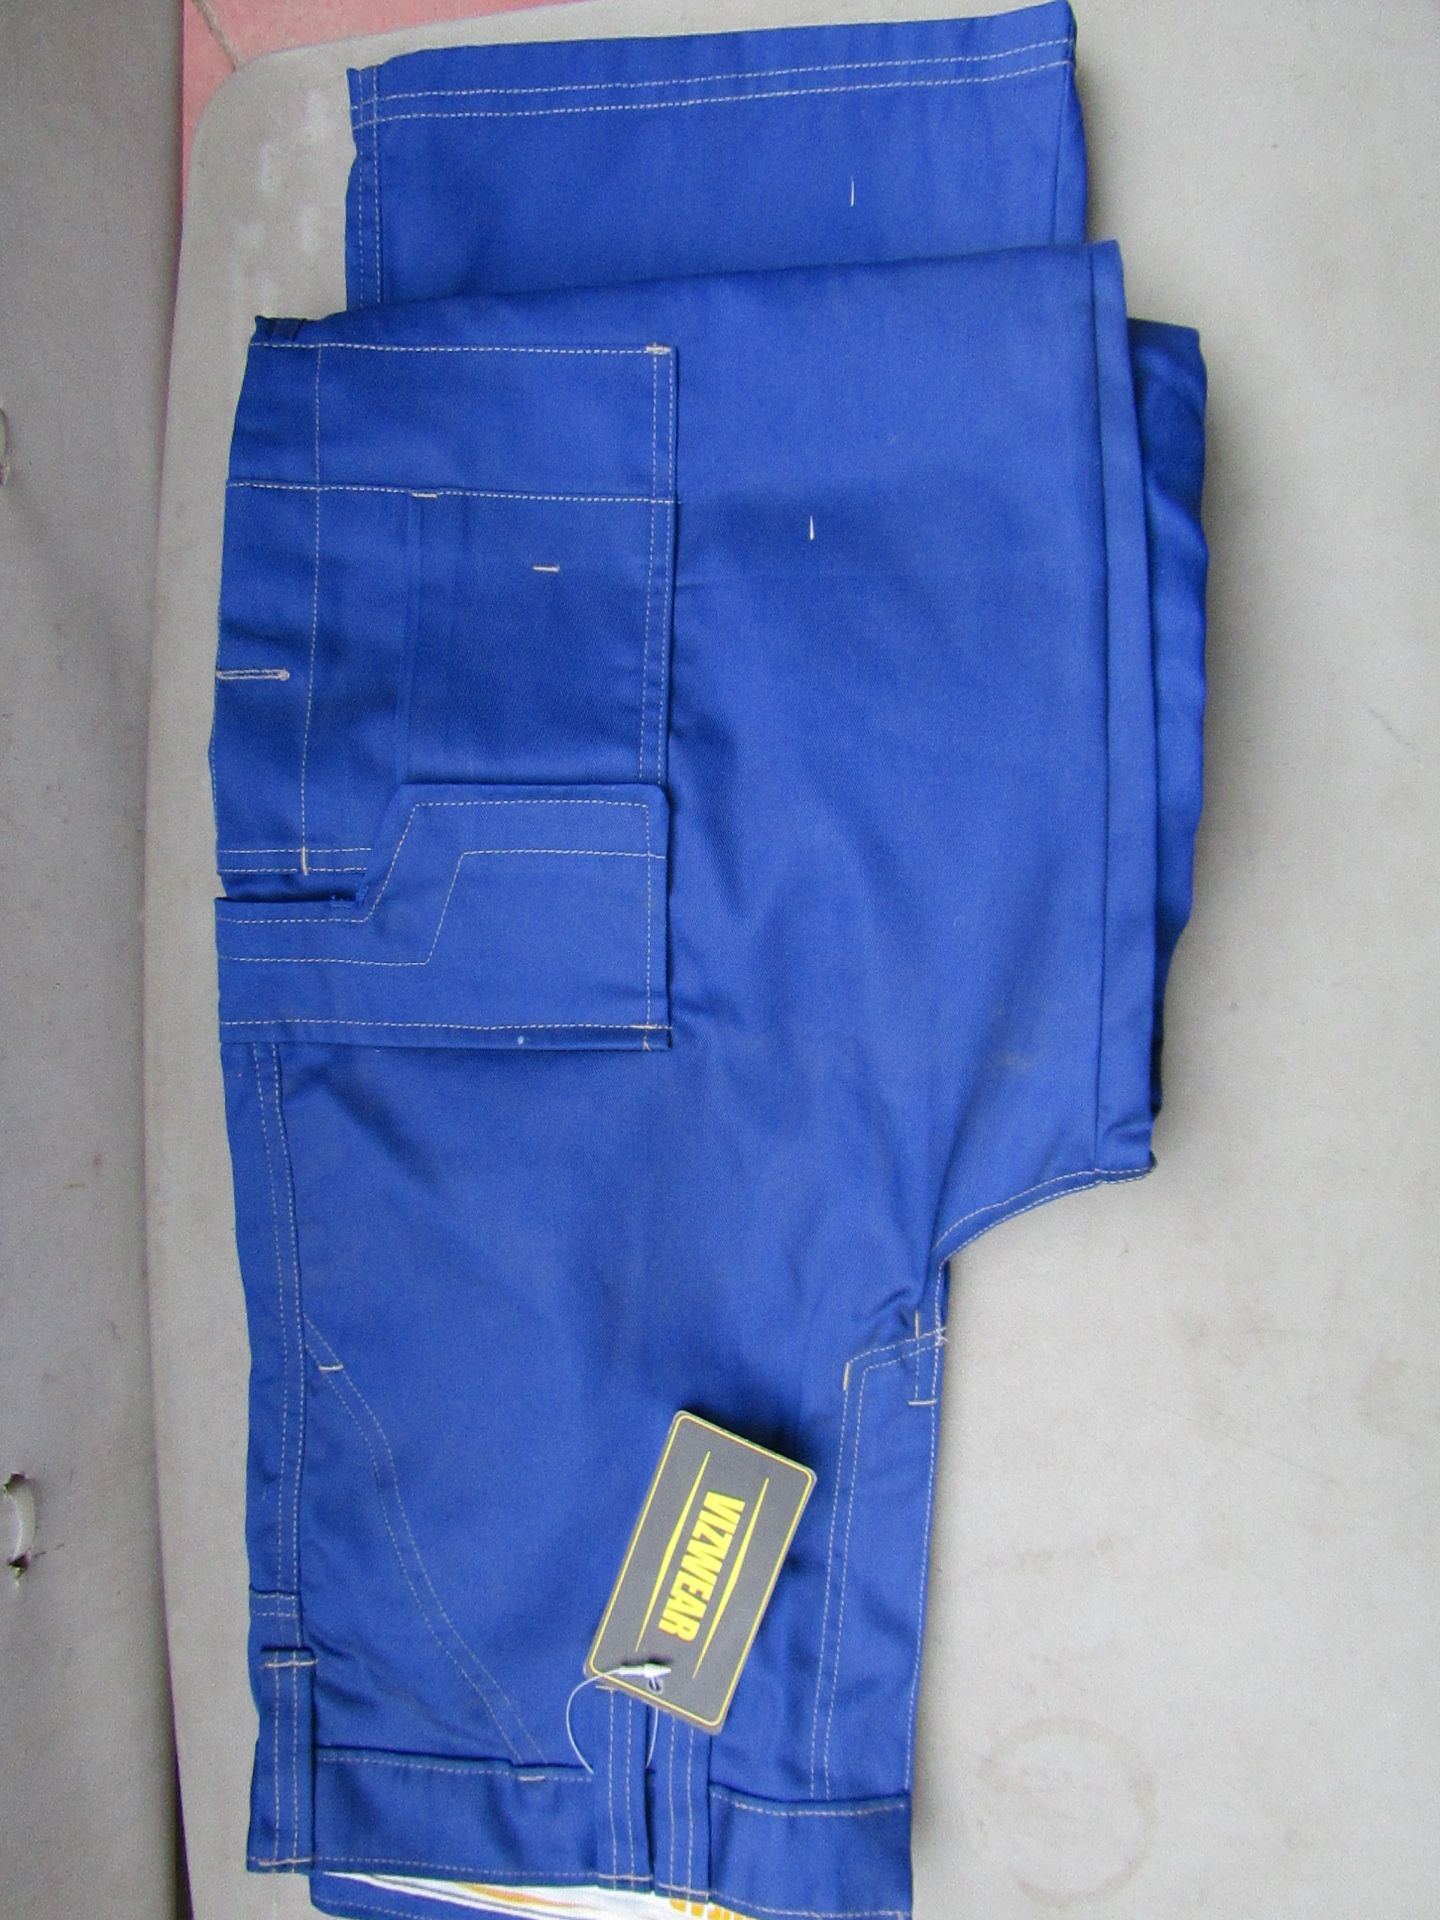 2 x Viz wear Blue Action Line work trousers, new size 30R, RRP £24.99